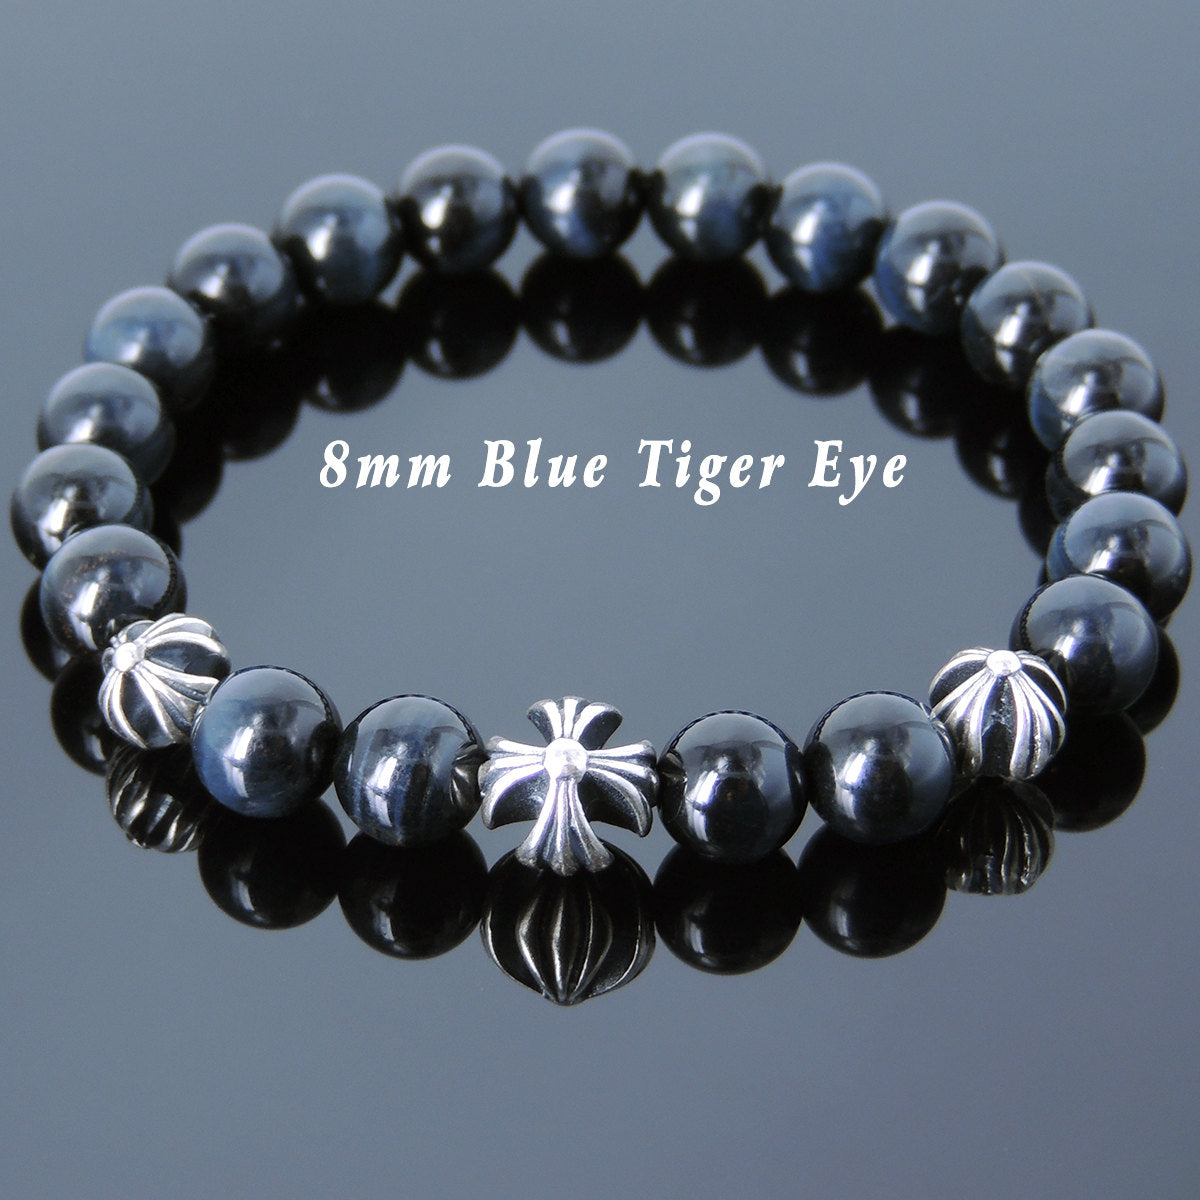 8mm Blue Tiger Eye Healing Gemstone Bracelet with S925 Sterling Silver Holy Trinity Cross Beads - Handmade by Gem & Silver BR749